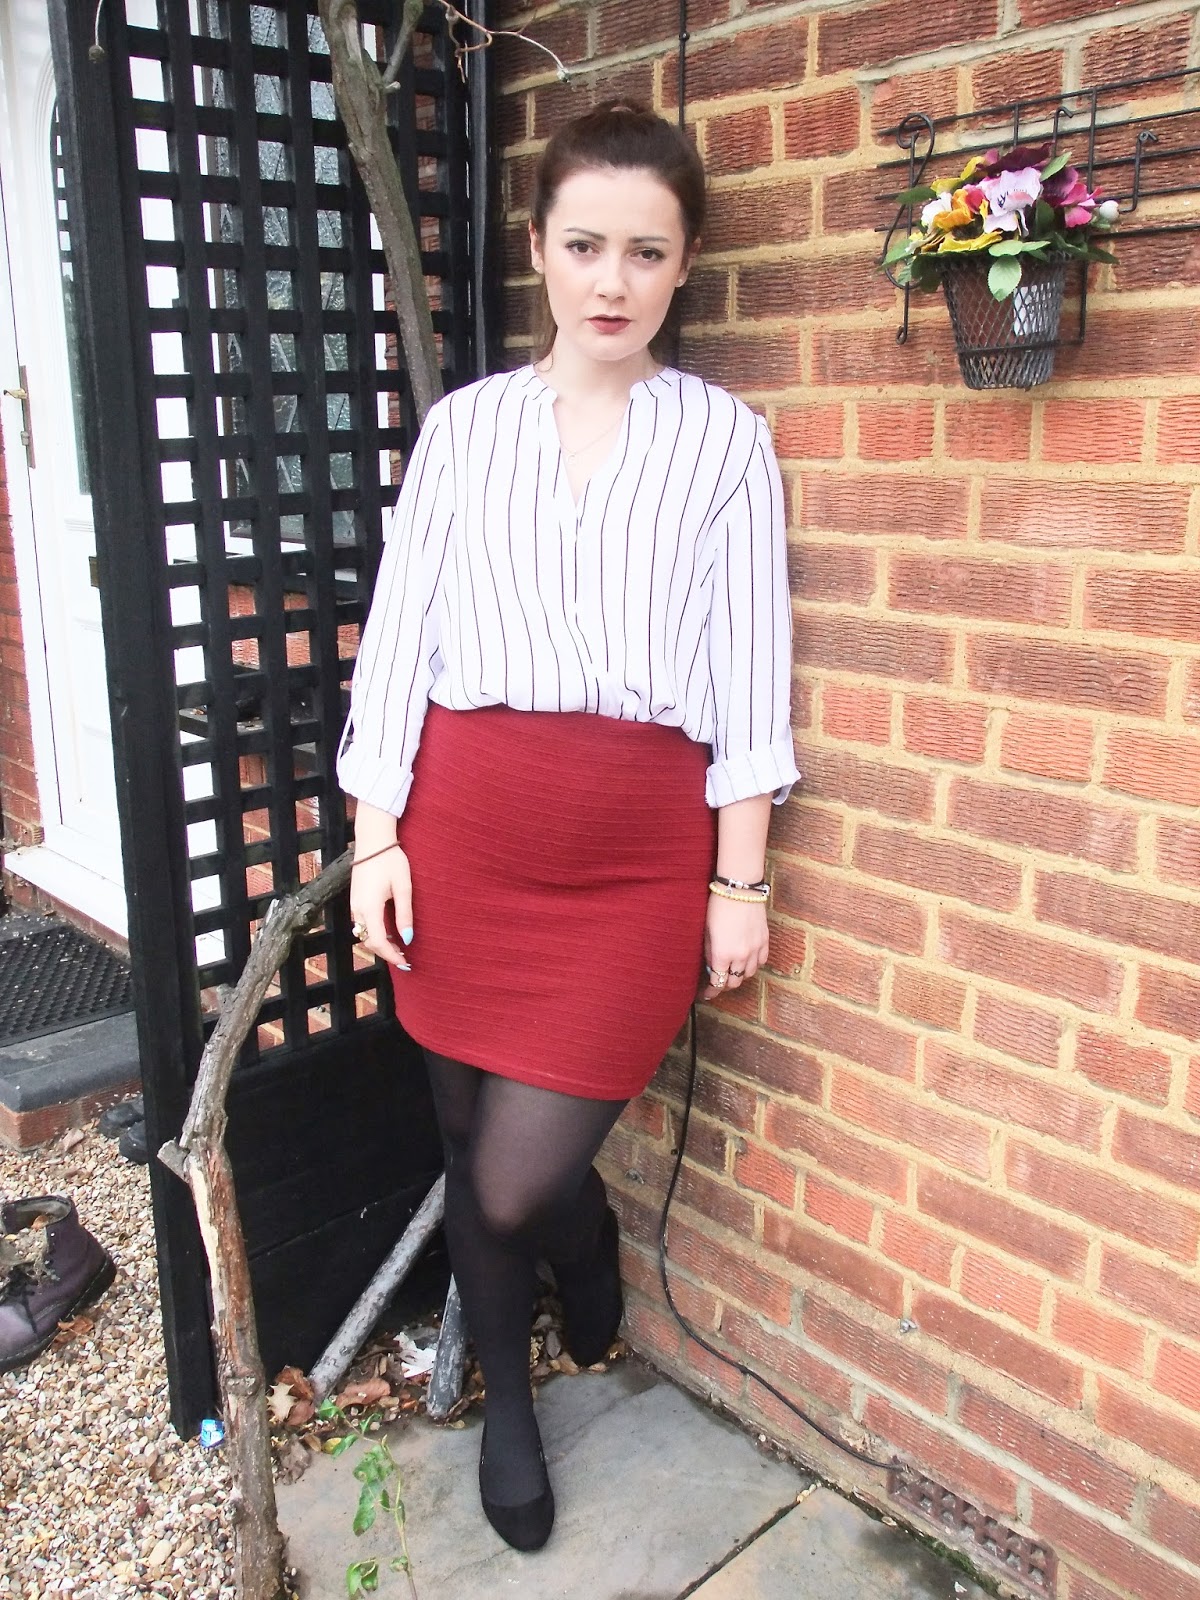 fabulous dressed blogger woman: Courtney from U.K